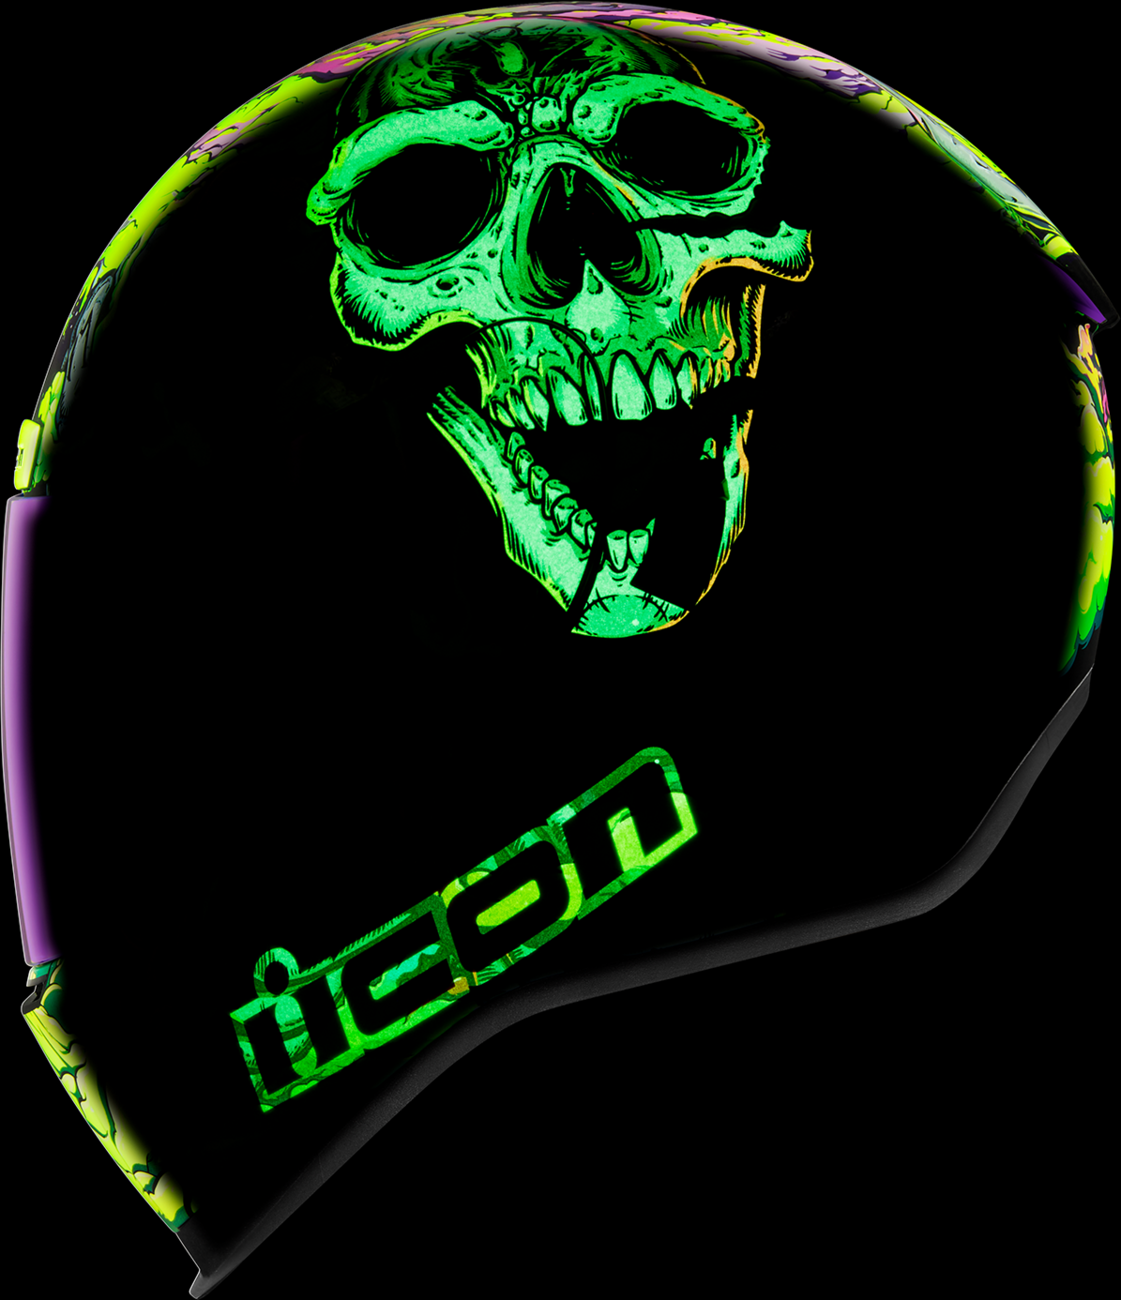 ICON Airform™ Helmet - Hippy Dippy - Purple - 3XL 0101-16030